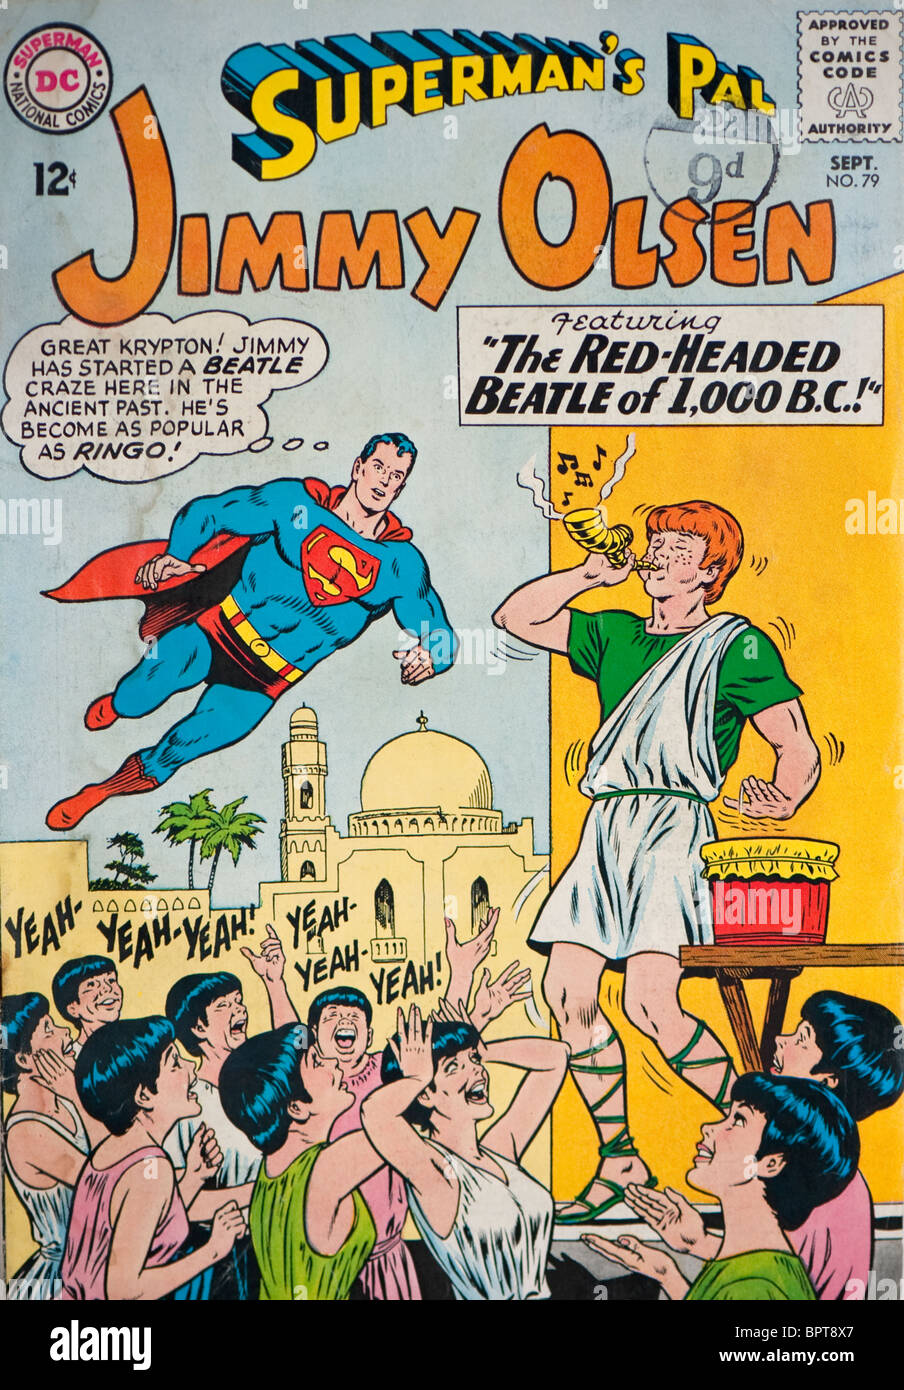 Cubierta de DC Comic Superman's Pal Jimmy Olsen Fotografía de stock - Alamy